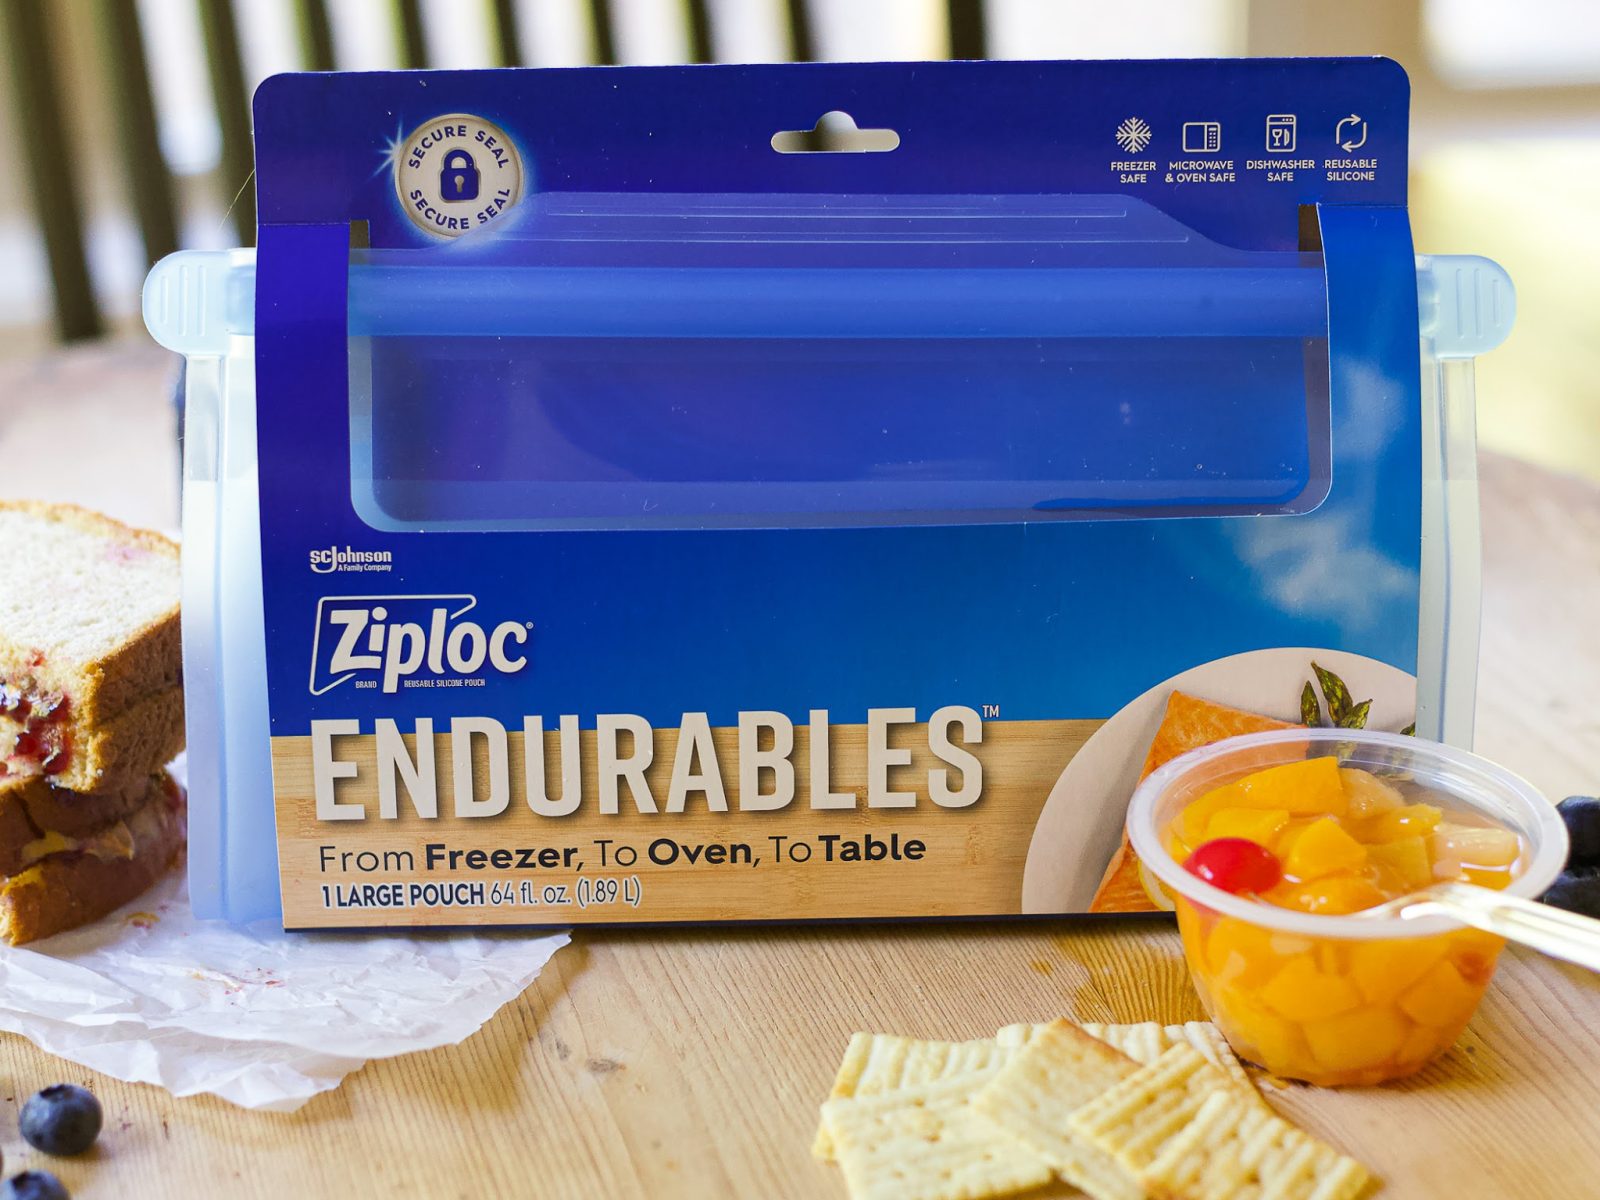 Ziploc Endurables Ibotta Offer For The Kroger Sale – Save Over $3